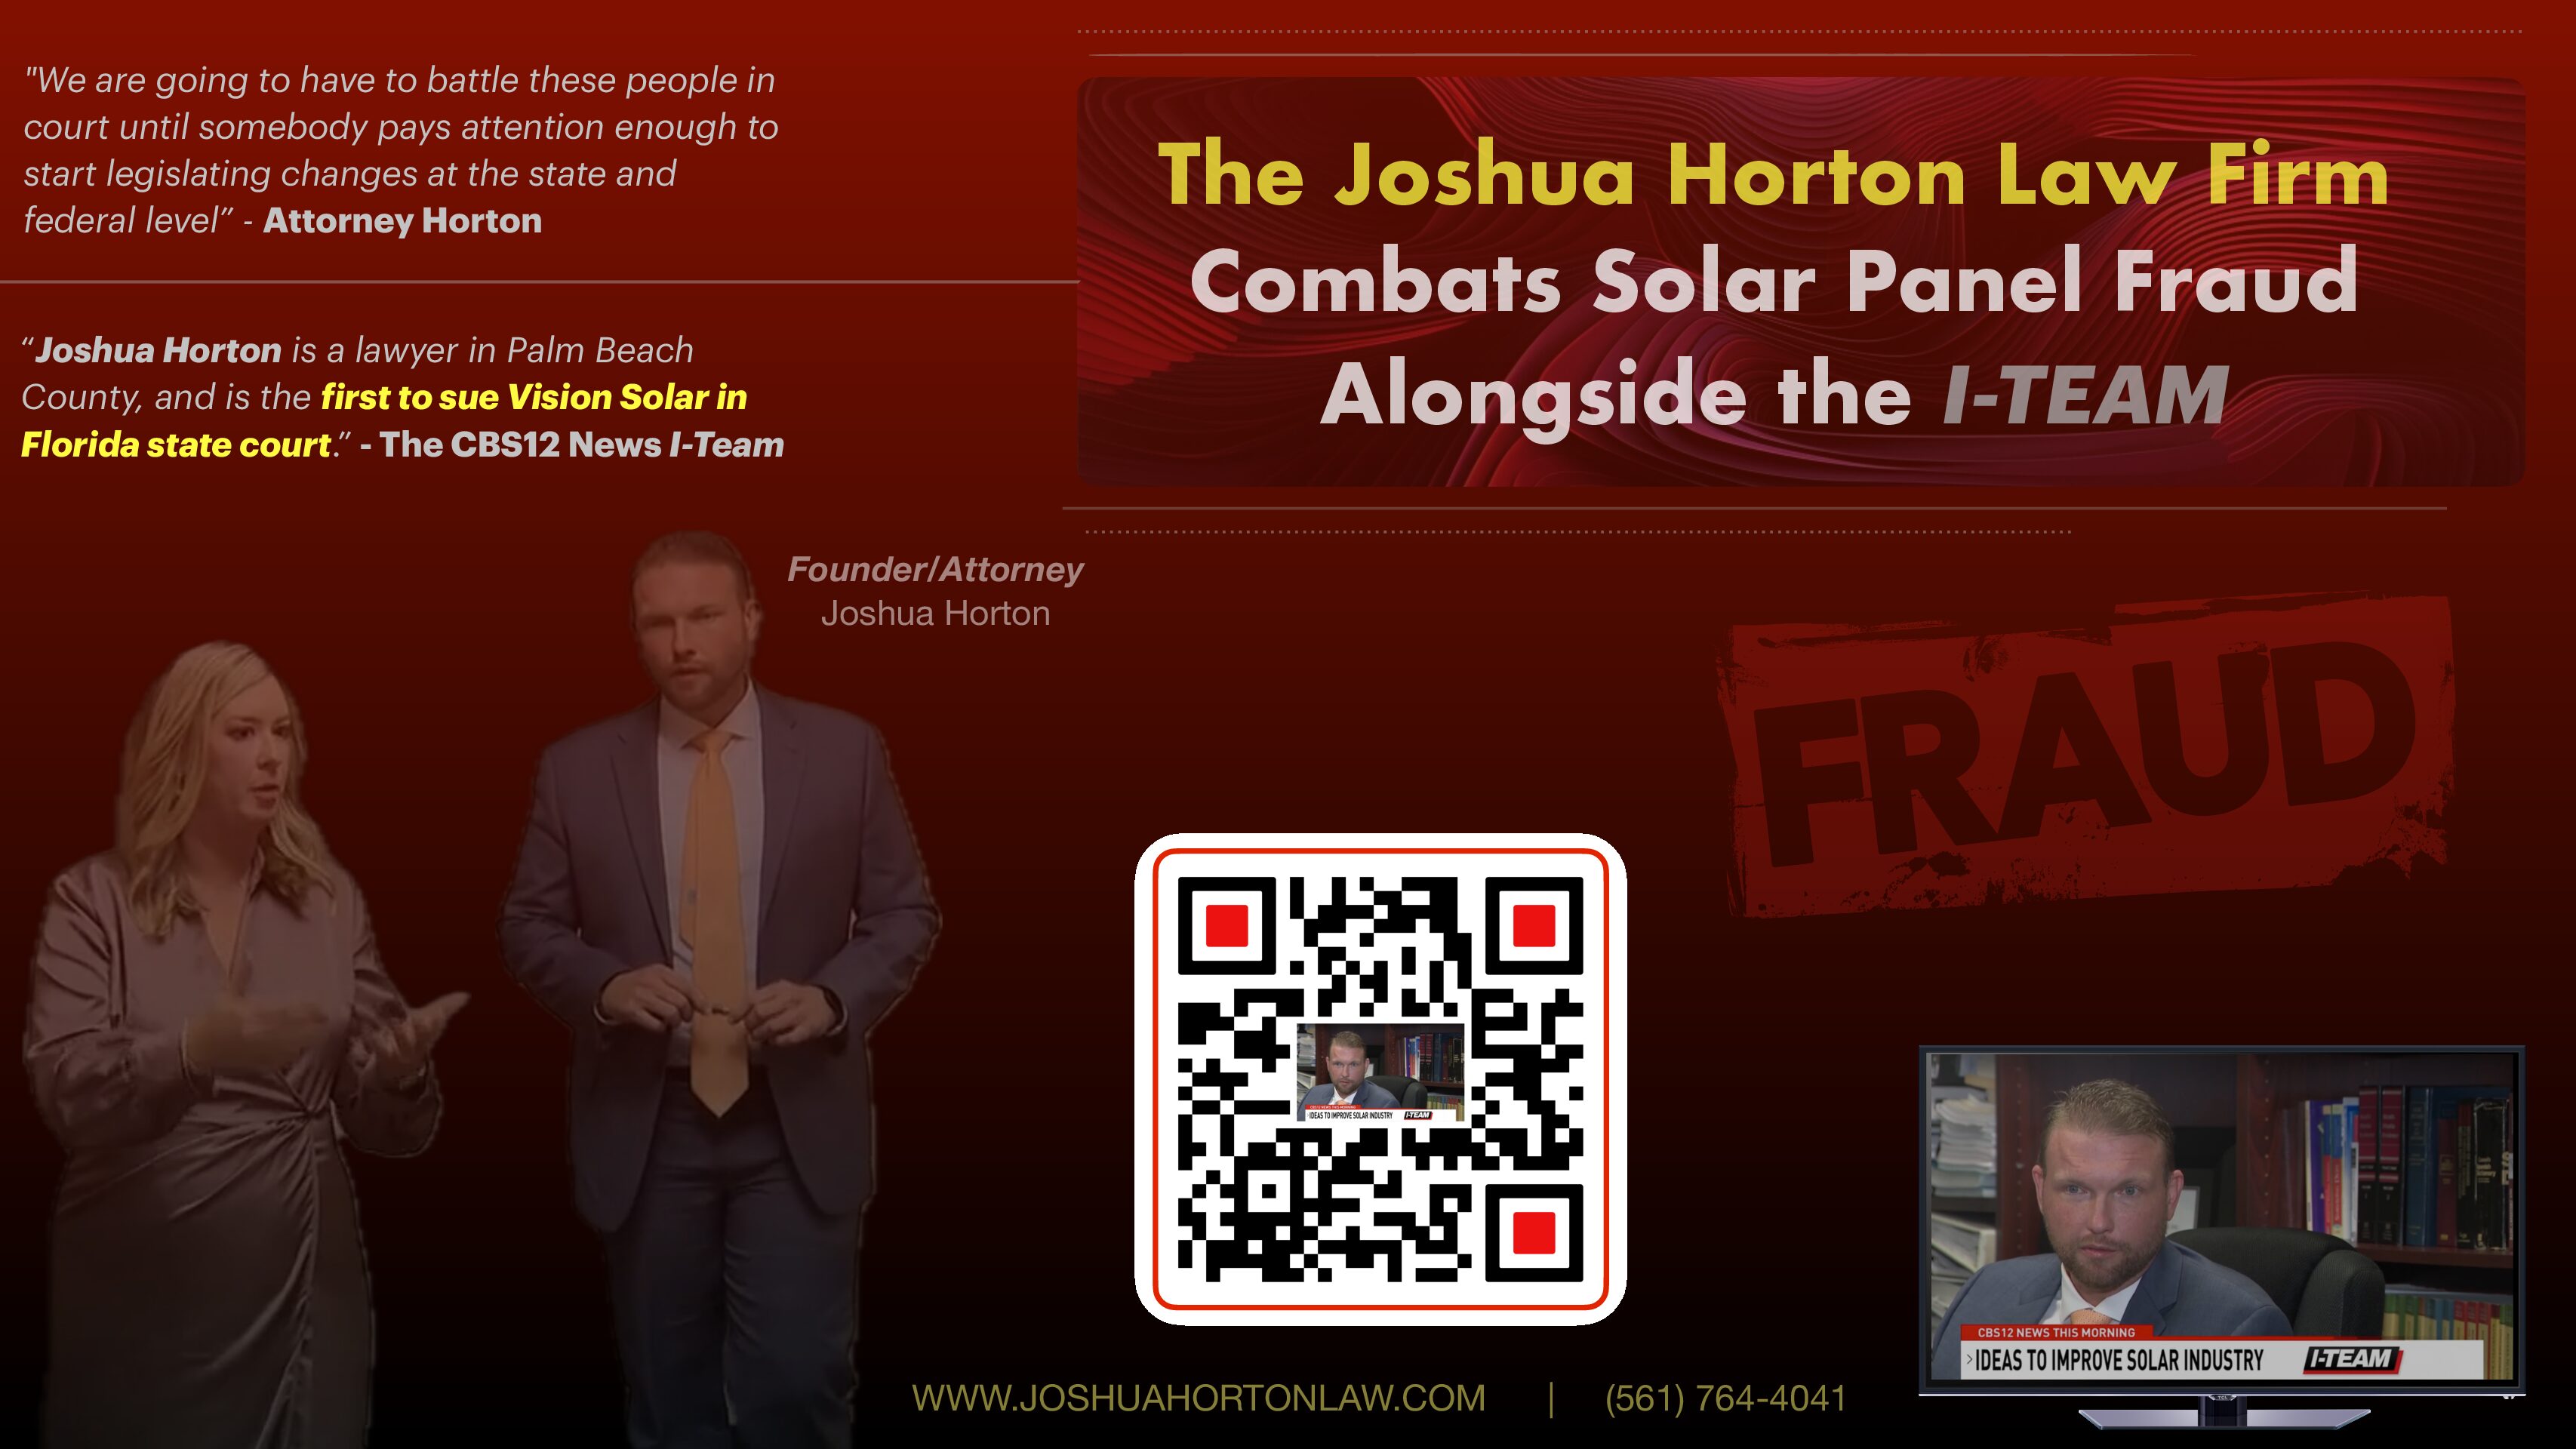 Joshua Horton Law and the I-TEAM Combat Solar Panel Fraud in Florida